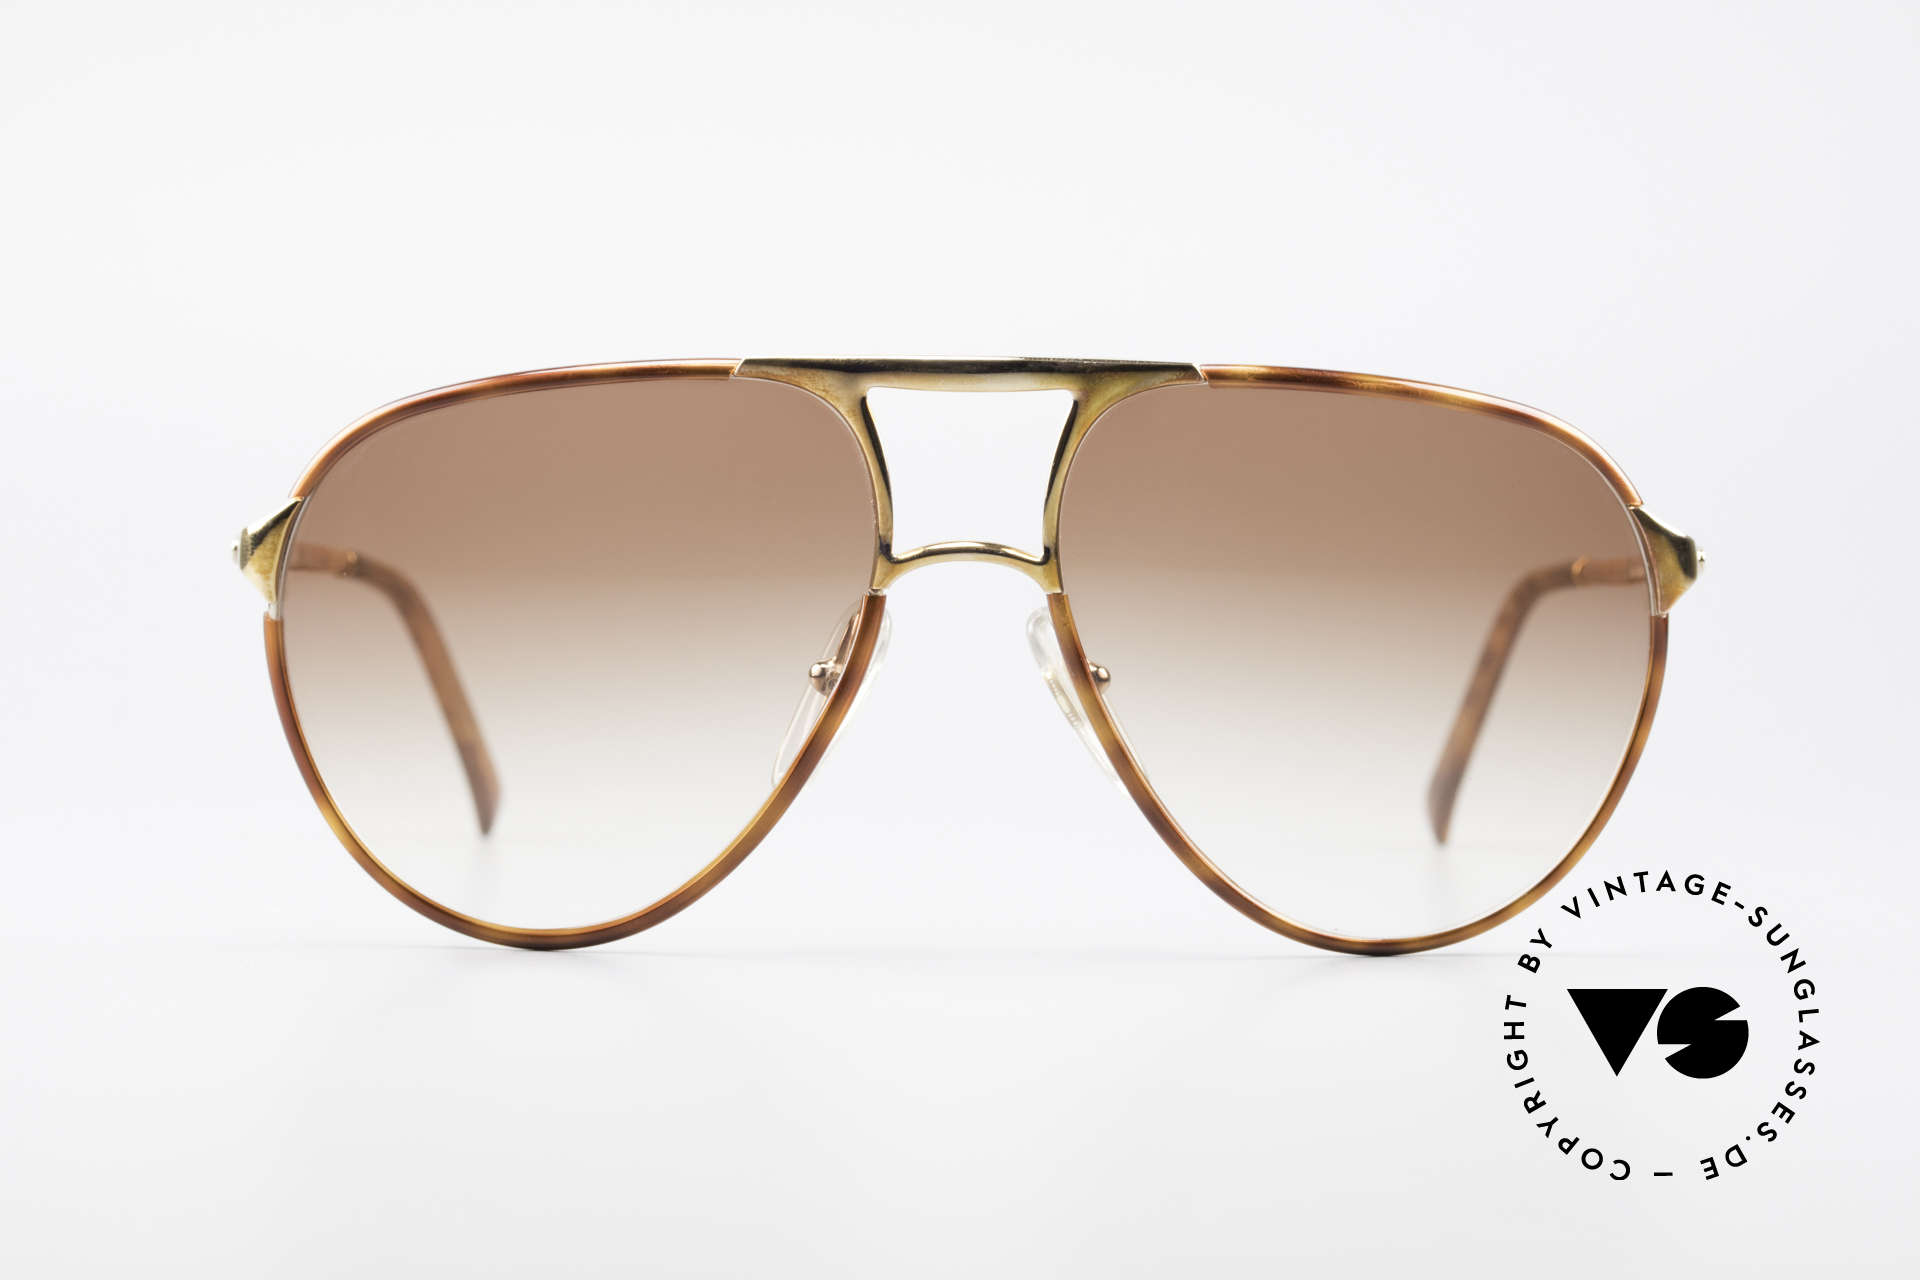 Sunglasses Christian Dior 2505 Designer Aviator Sunglasses